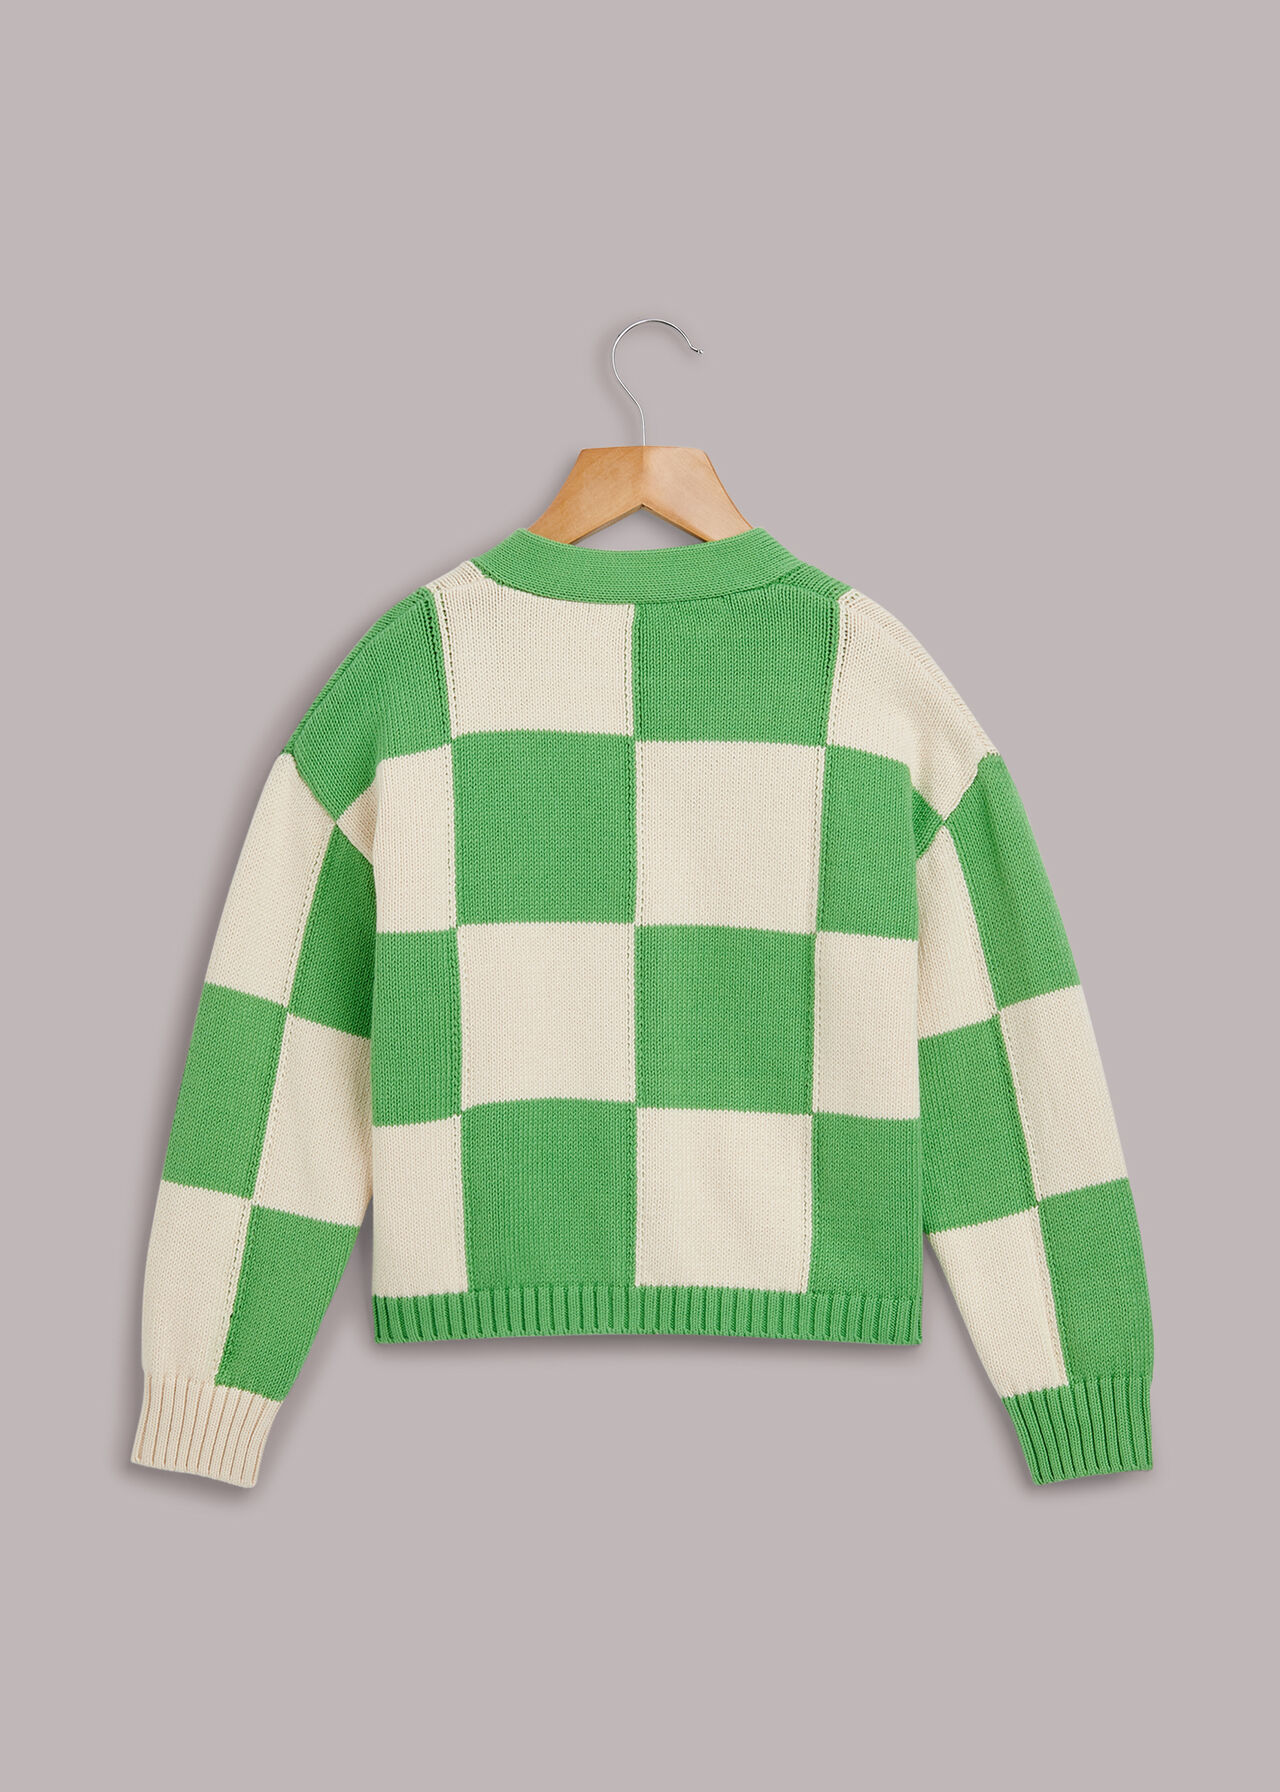 Checkerboard Knit Cardigan